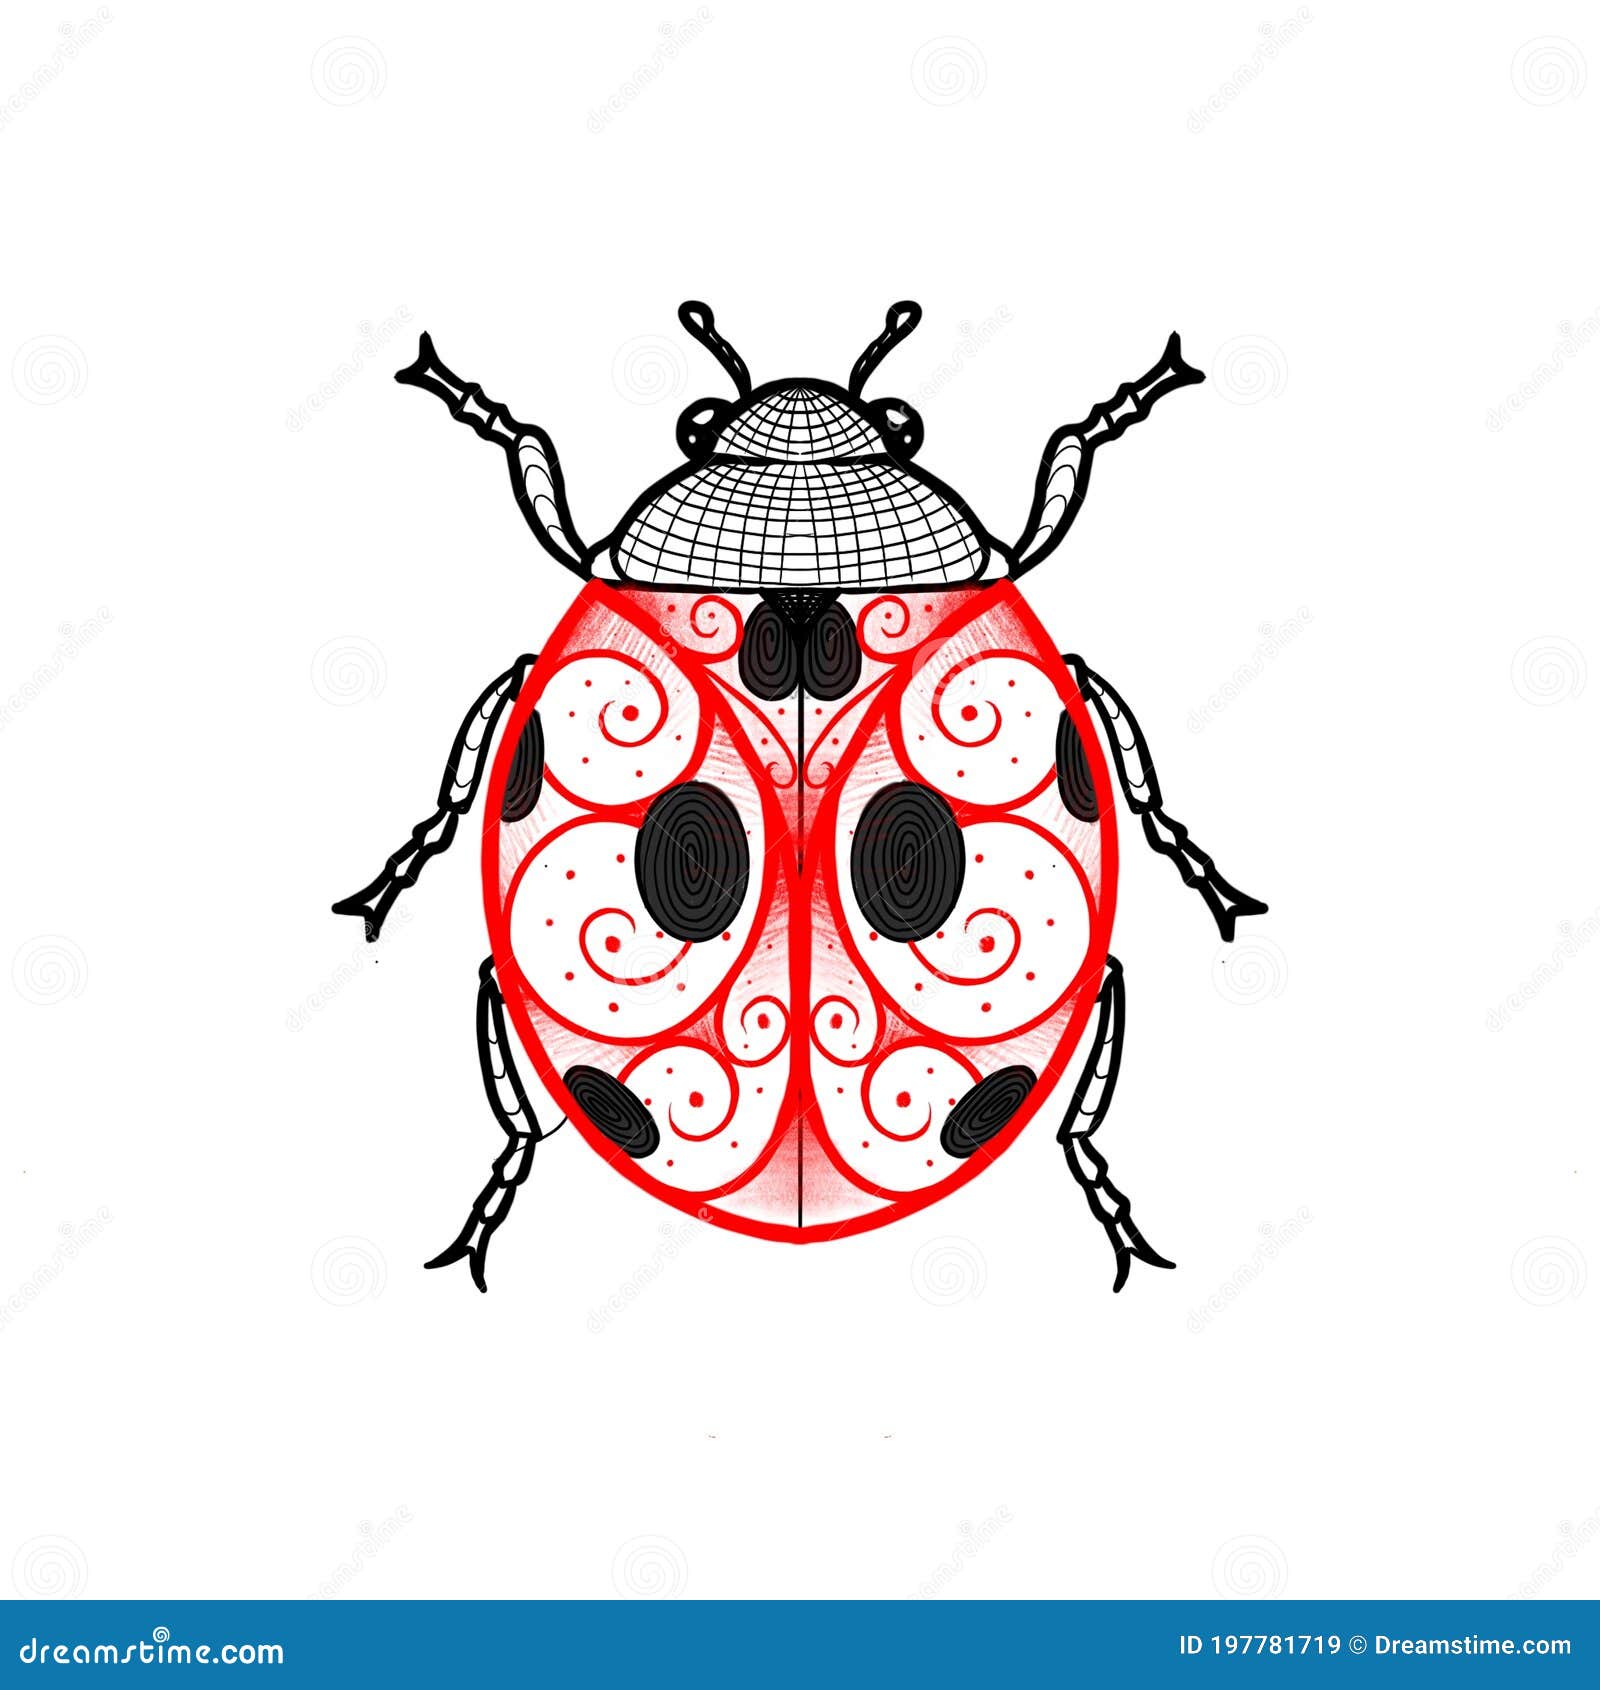 Premium Vector | Aesthetic floral ladybug tattoo silhouette graphic